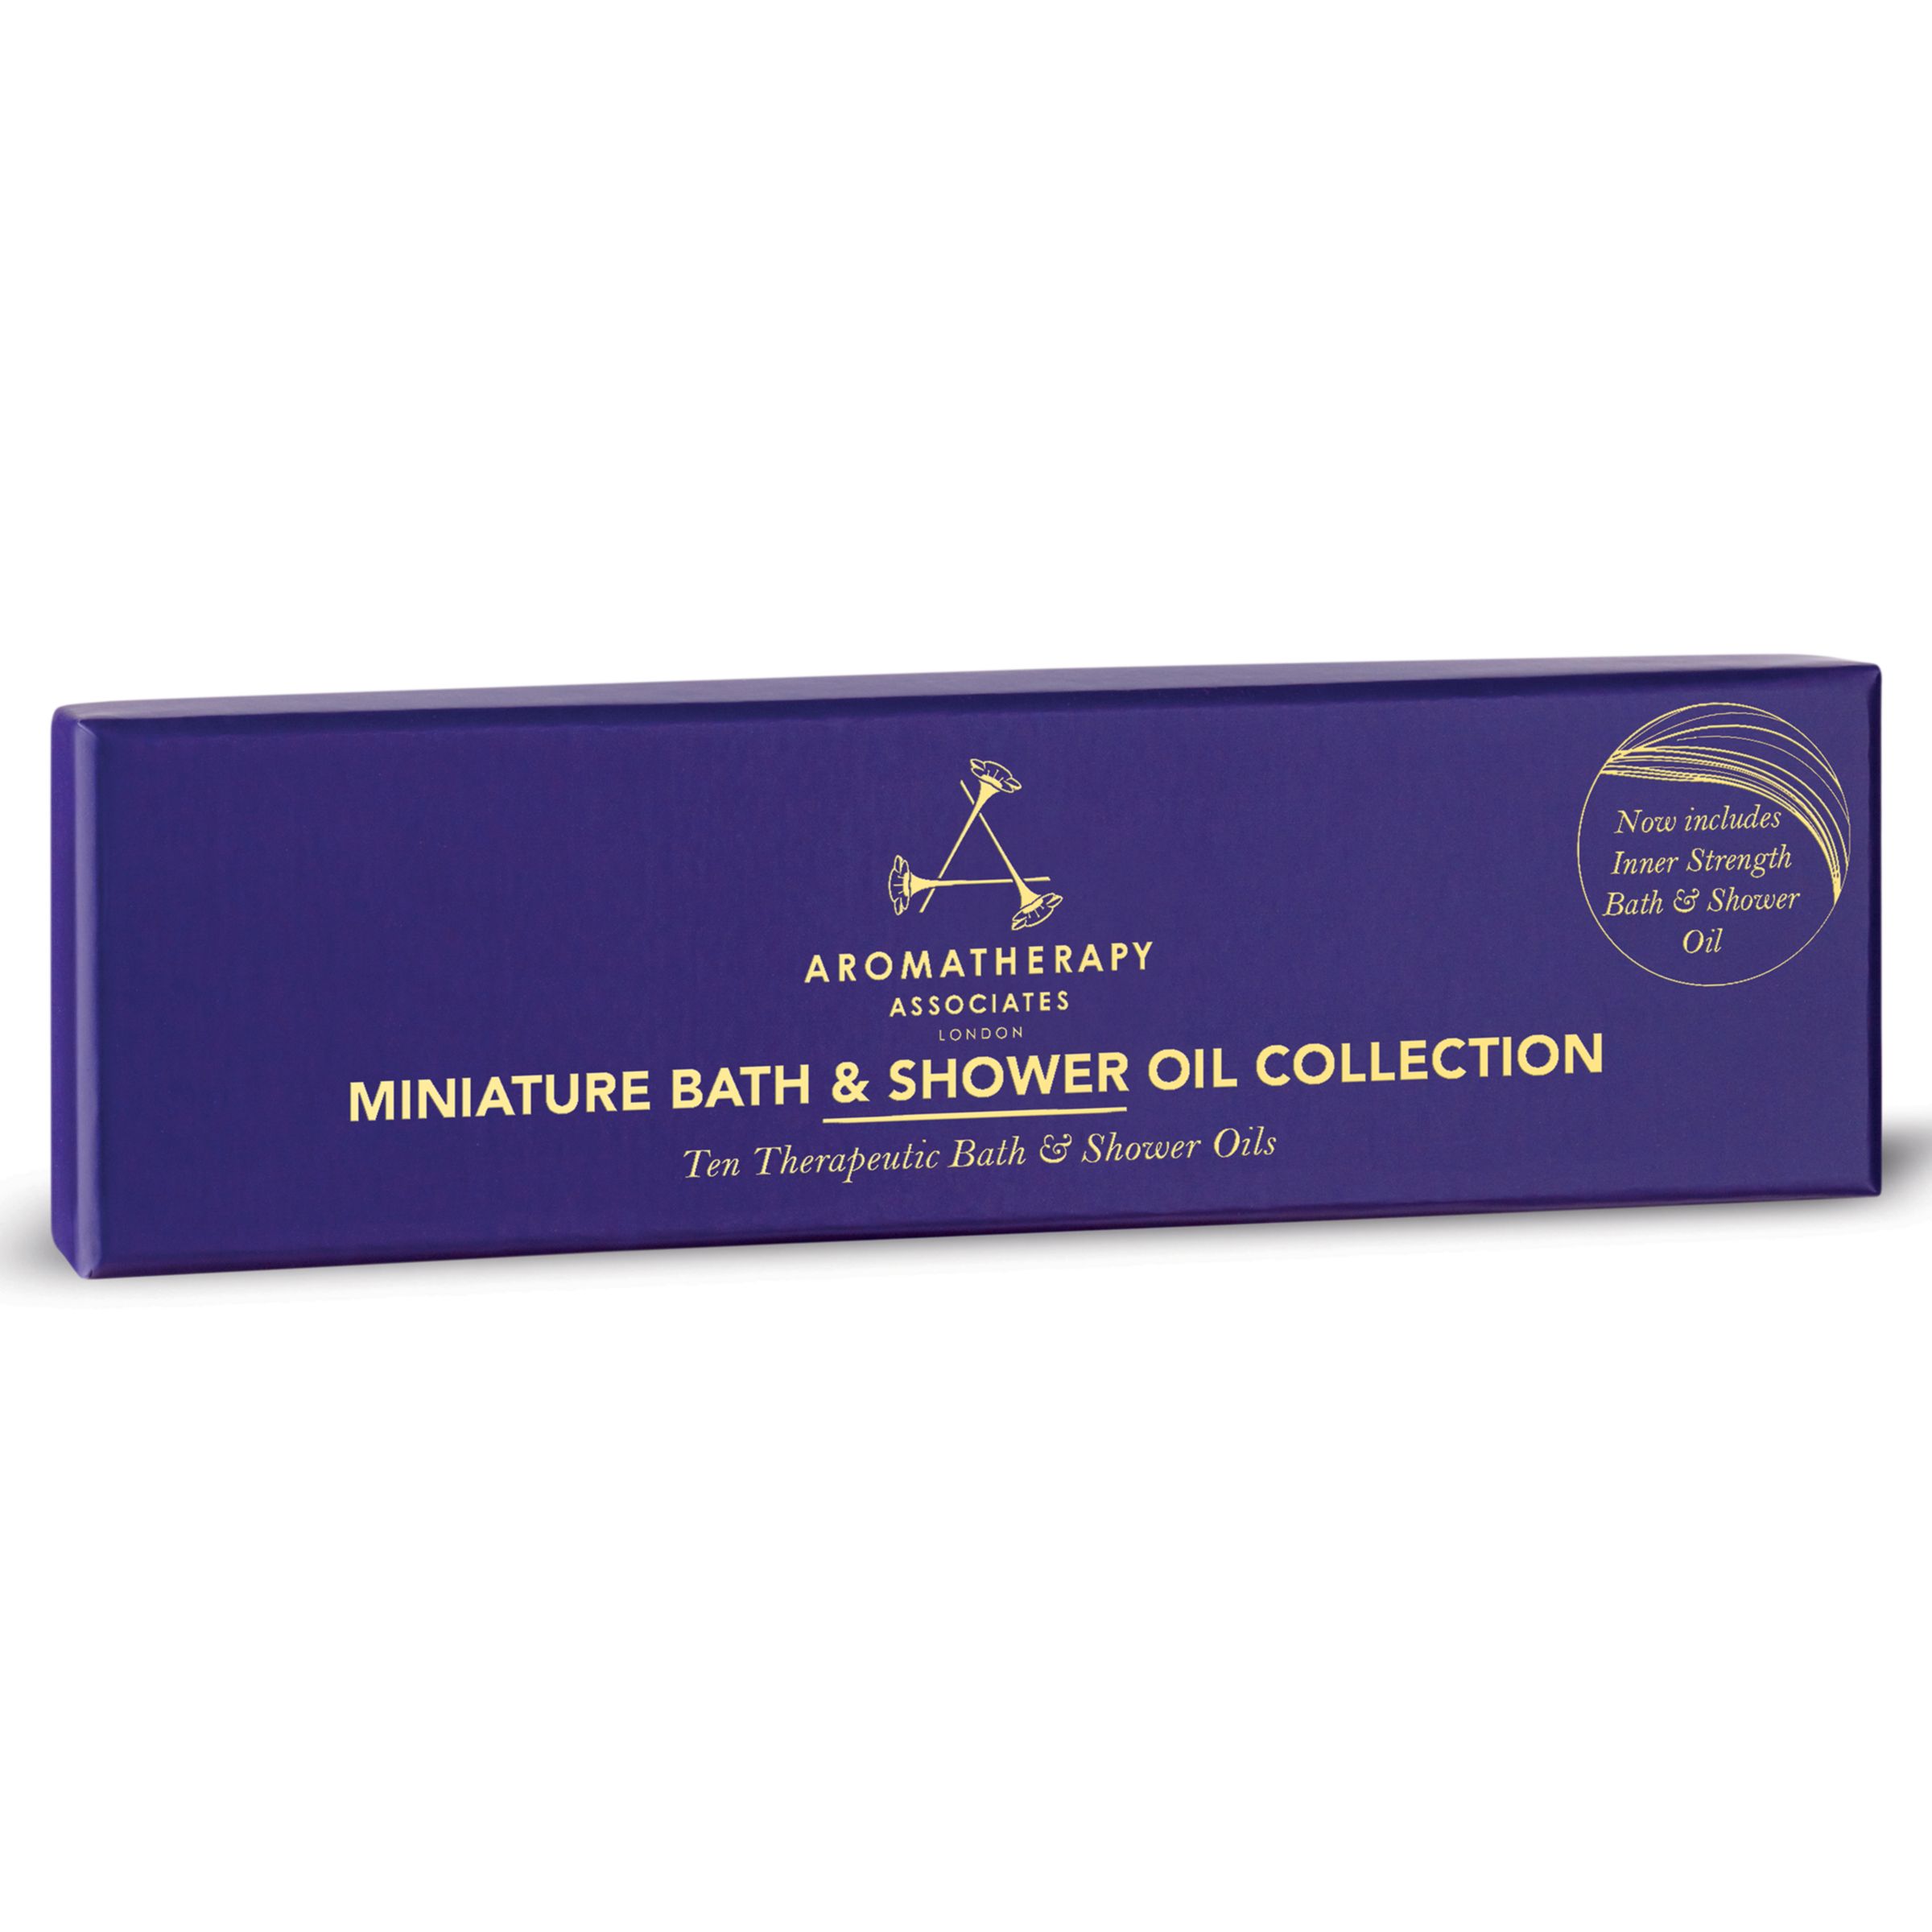 Aromatherapy Associates Miniature Collection Bath & Shower Oils, 10 x 3ml